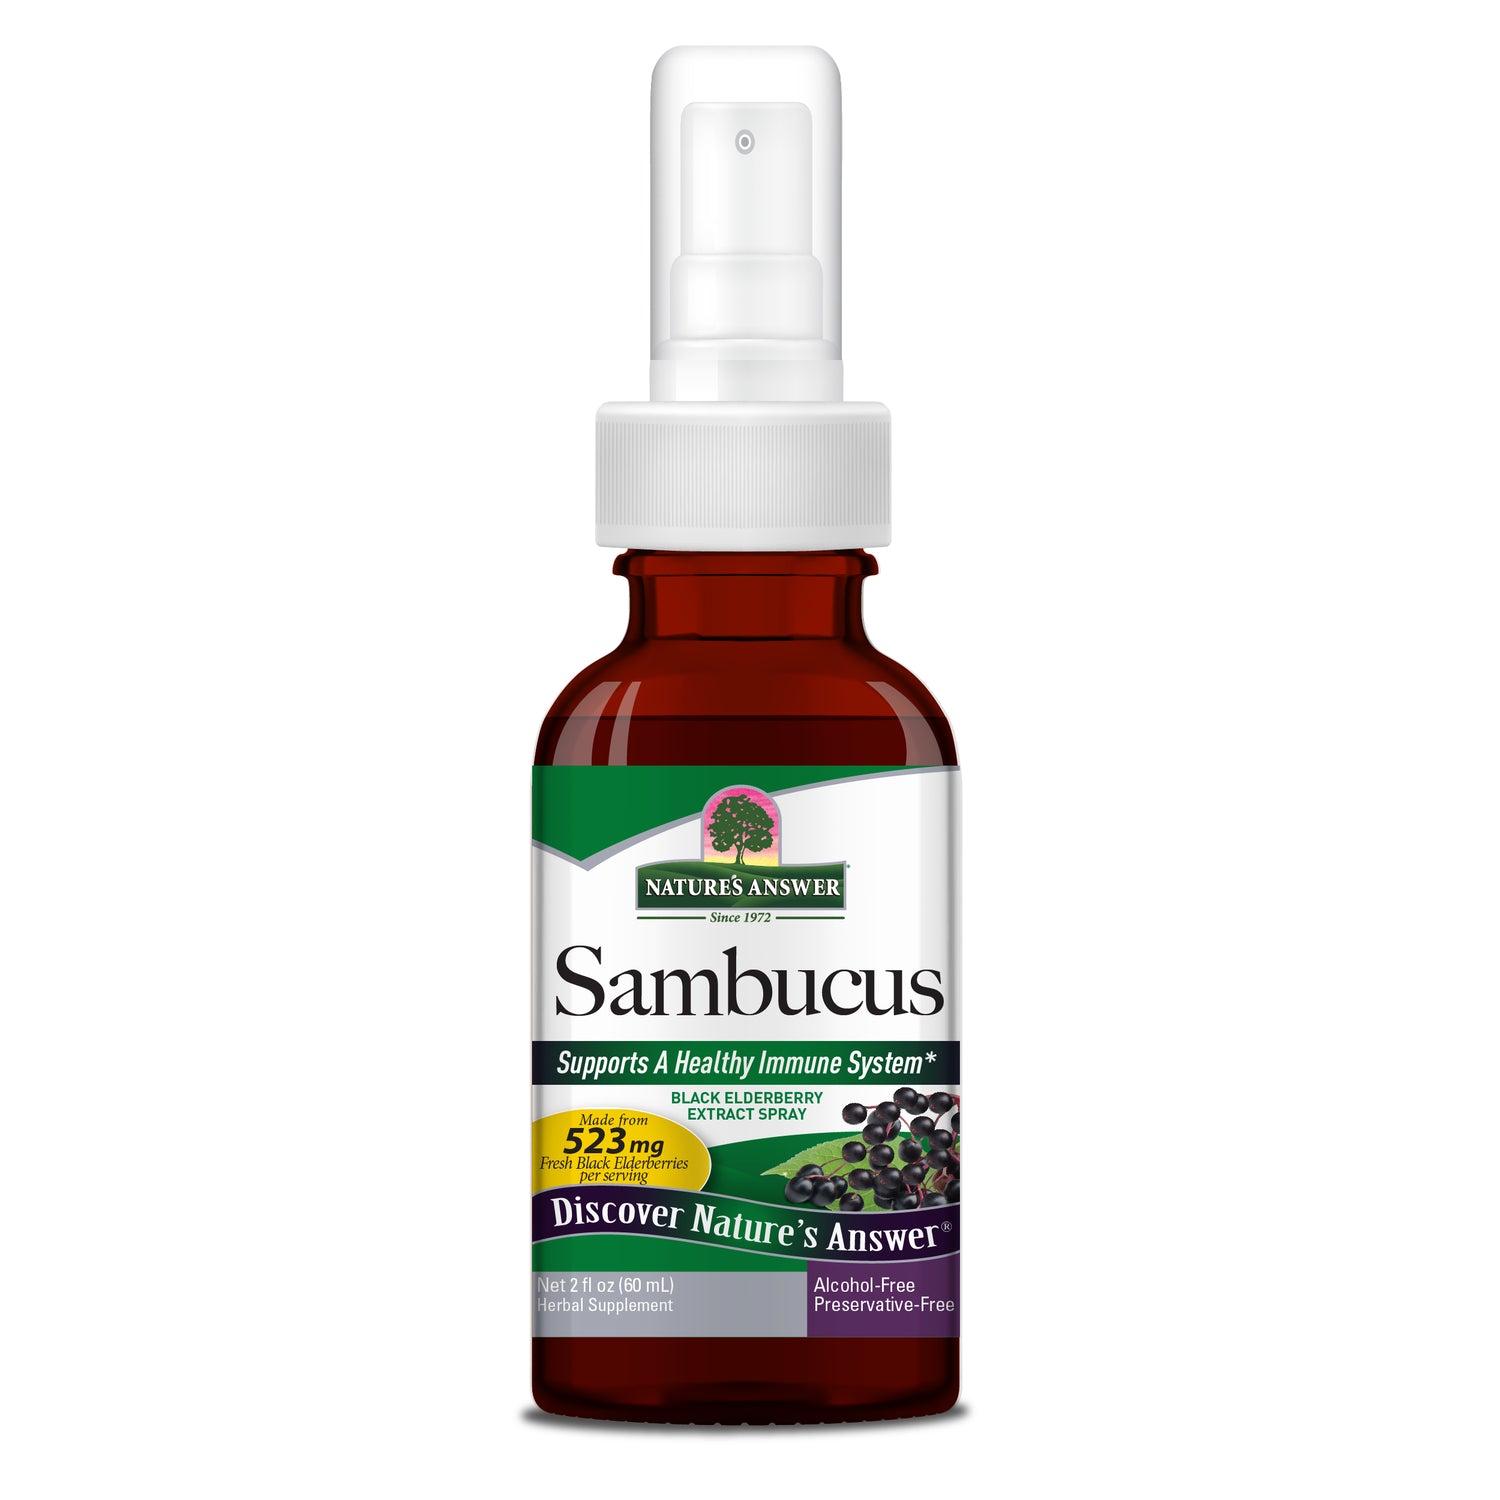 Nature's Answer Sambucus Extract Spray